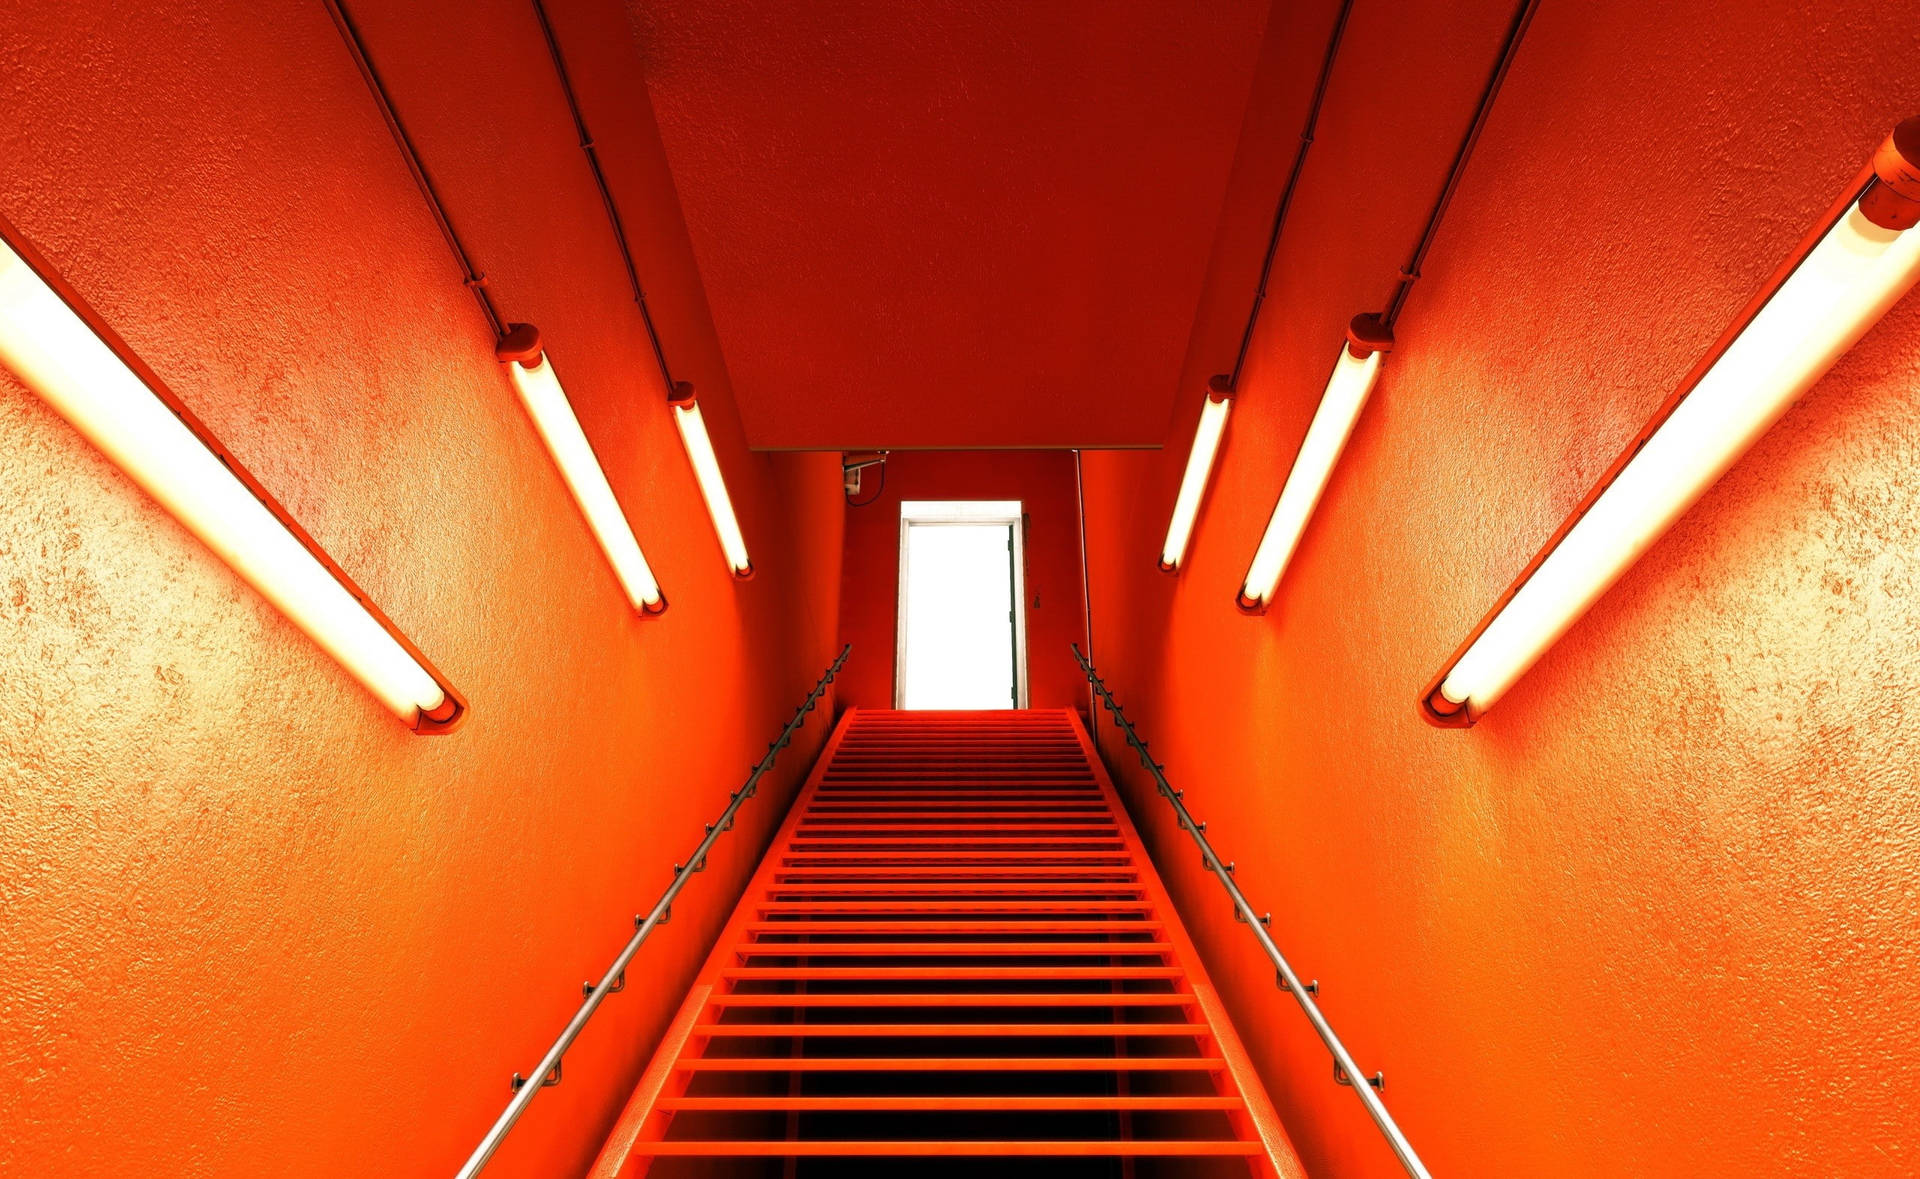 Neon Orange Aesthetic Pictures Wallpaper